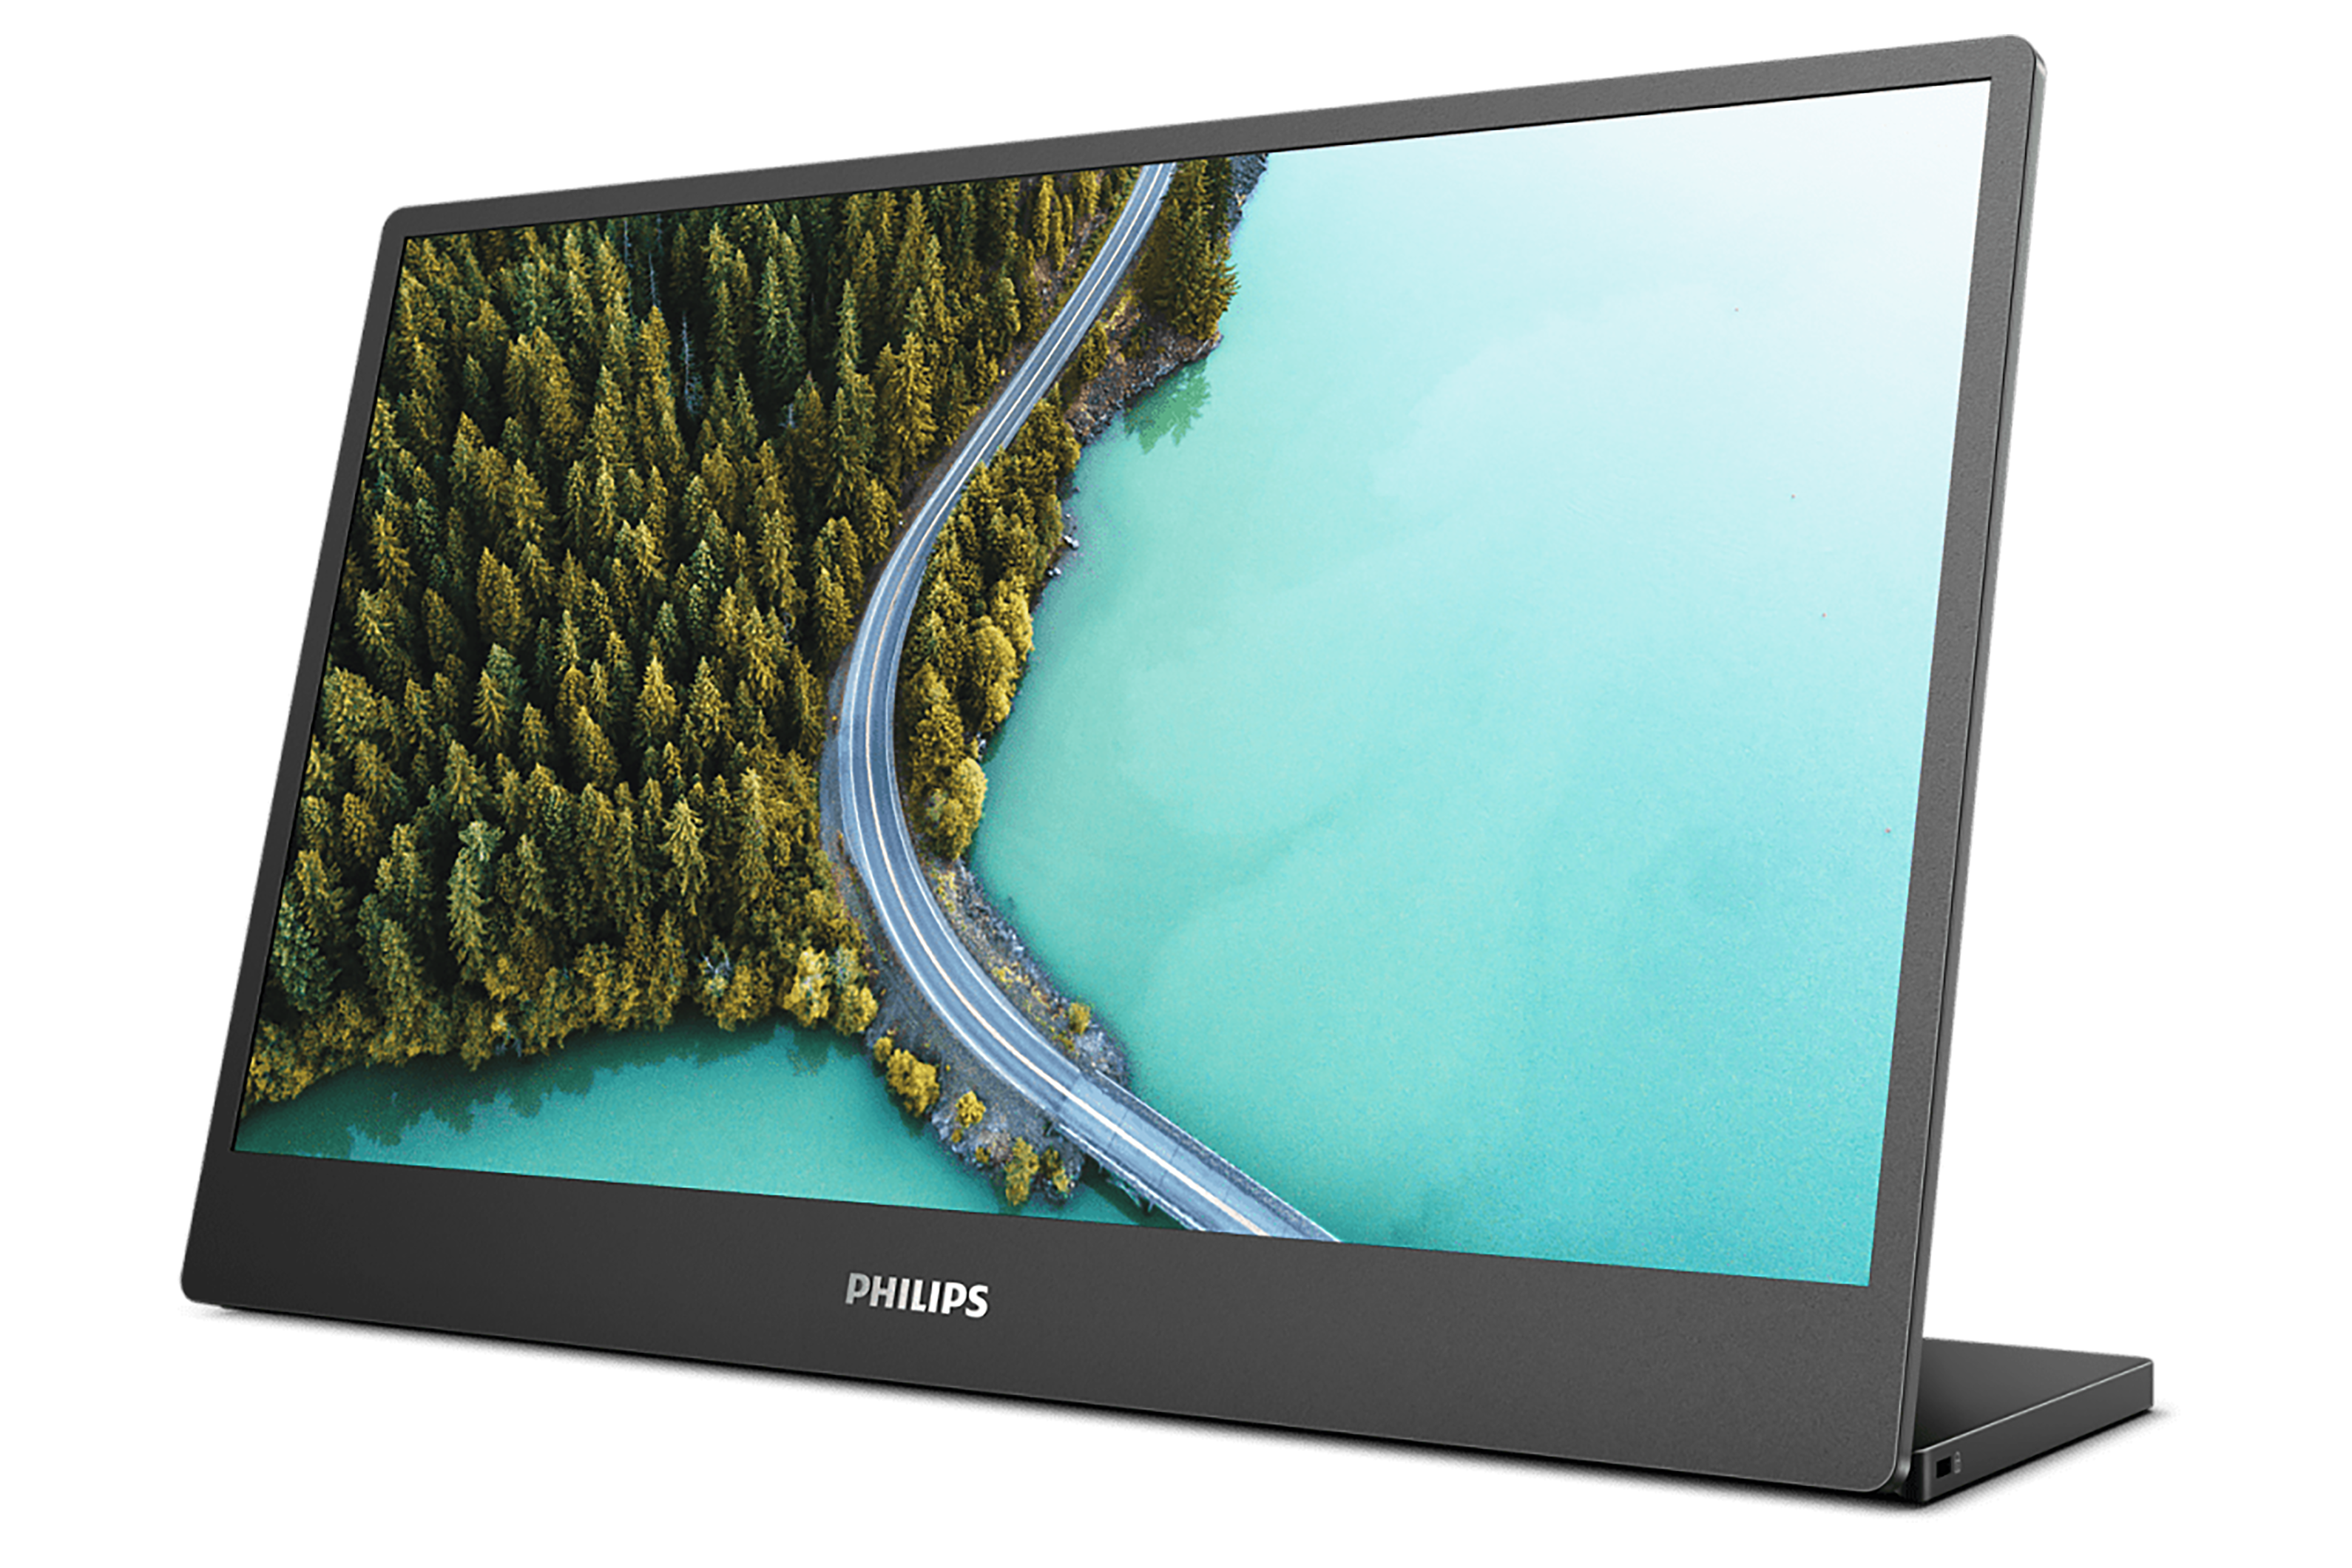 Vooruitgang Kluisje Hymne Philips 16B1P3302 draagbare monitor werkt met vrijwel elke laptop | TechFi